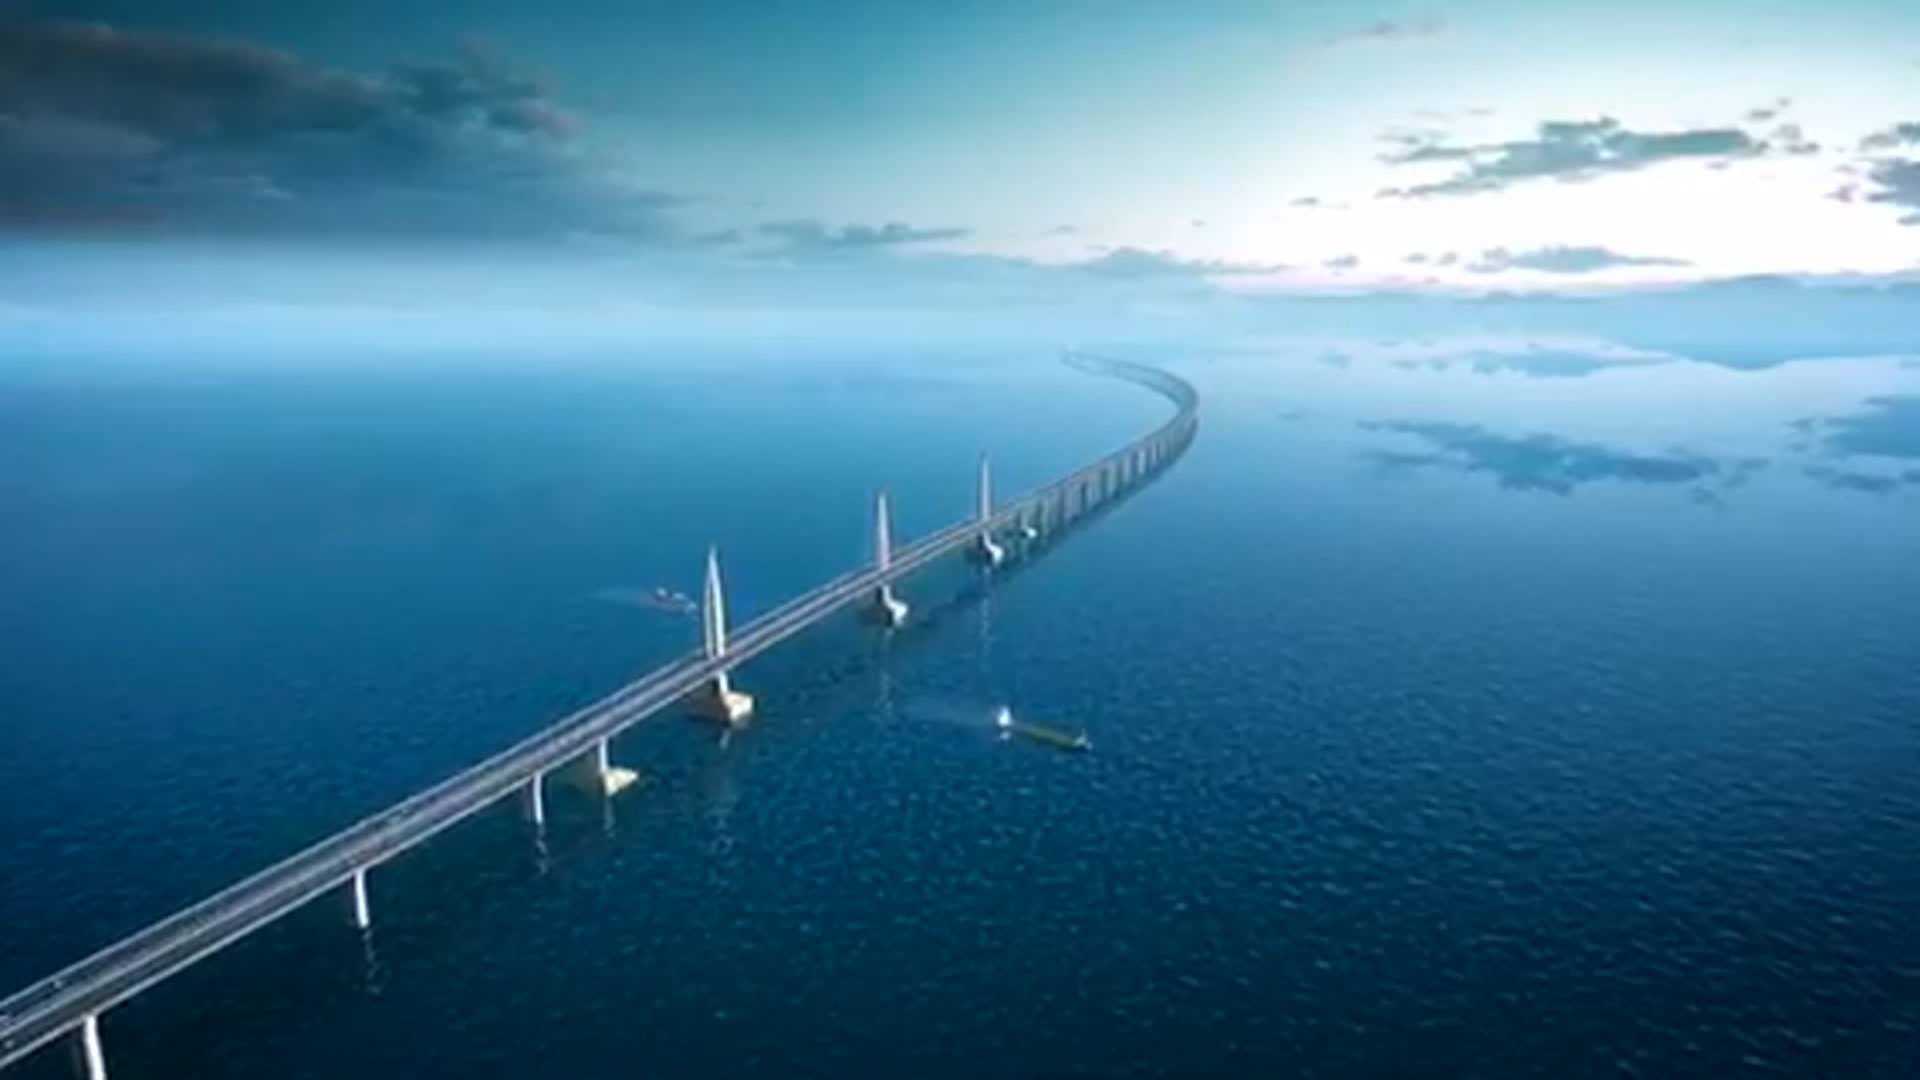 Aerial view: Main span of world's longest sea bridge closed - YouTube